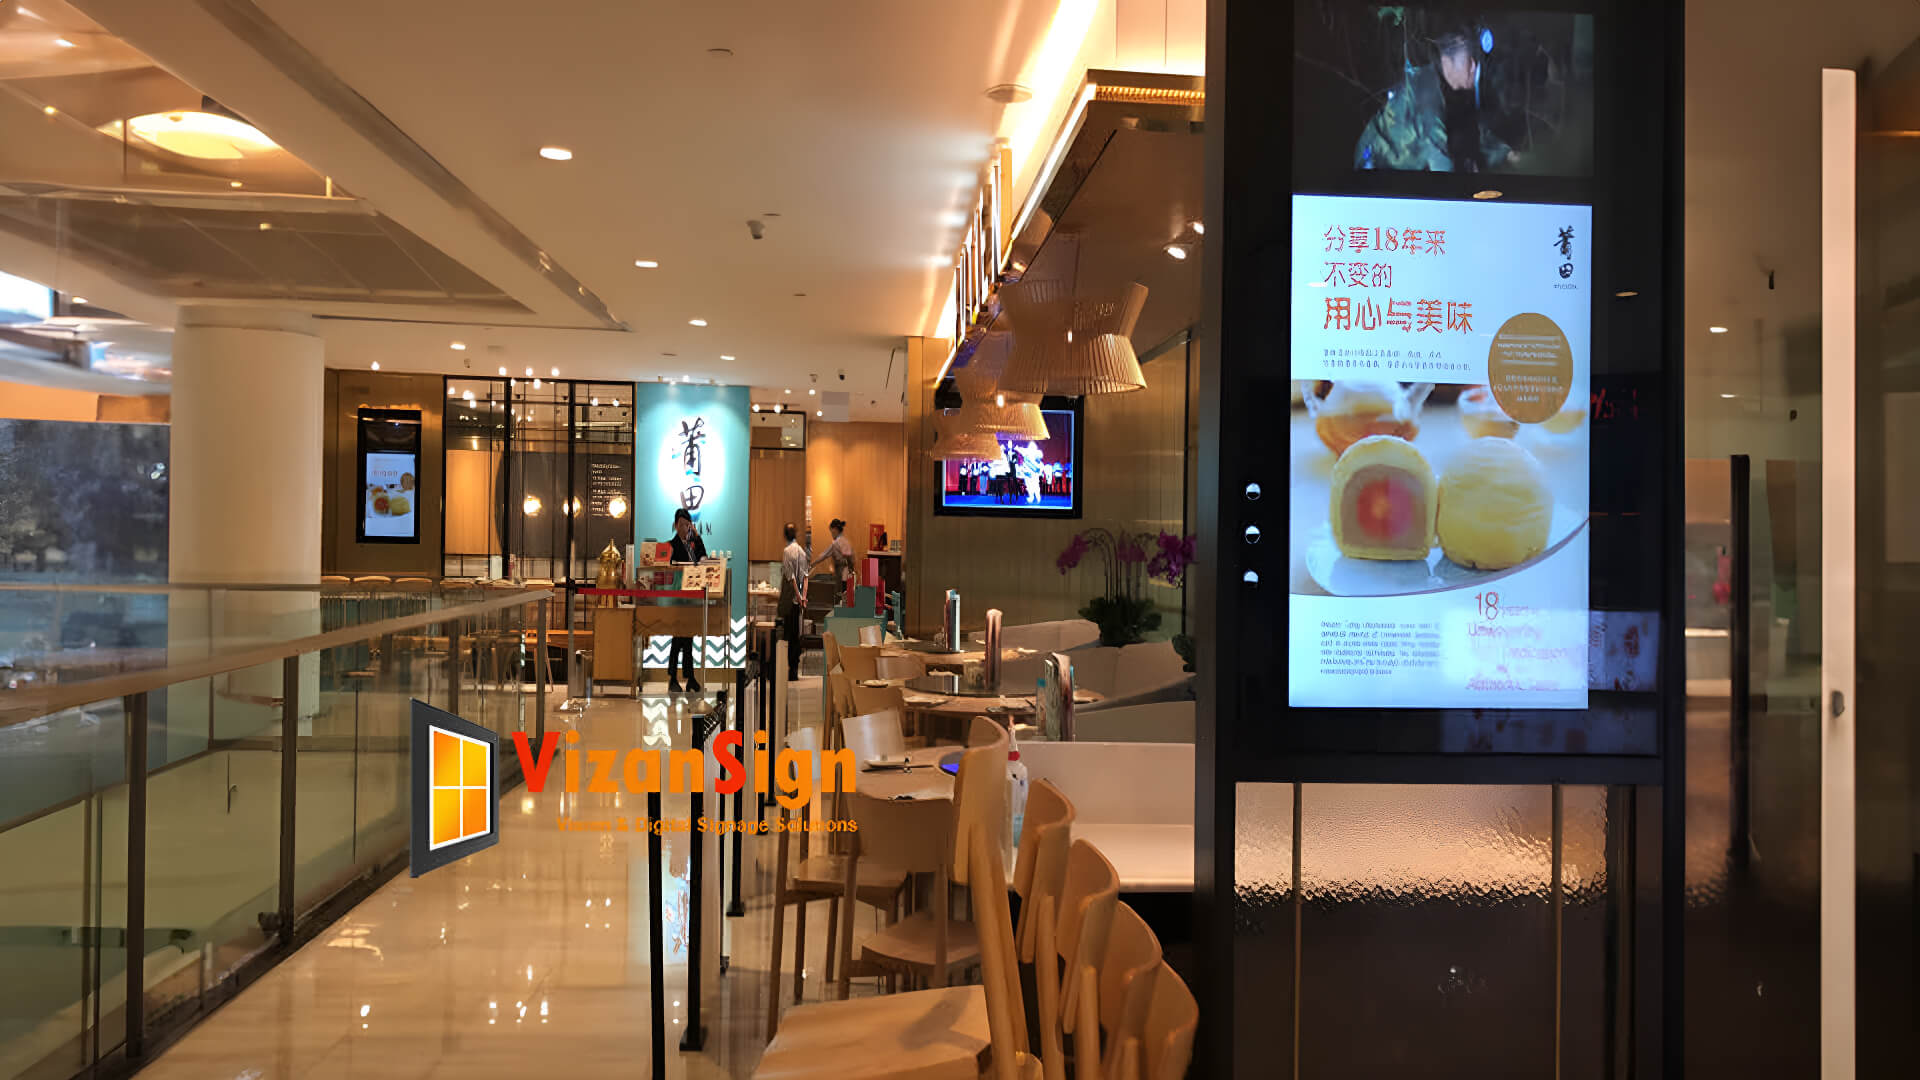  VizanSign's digital menu board solution at a Chinese restaurant